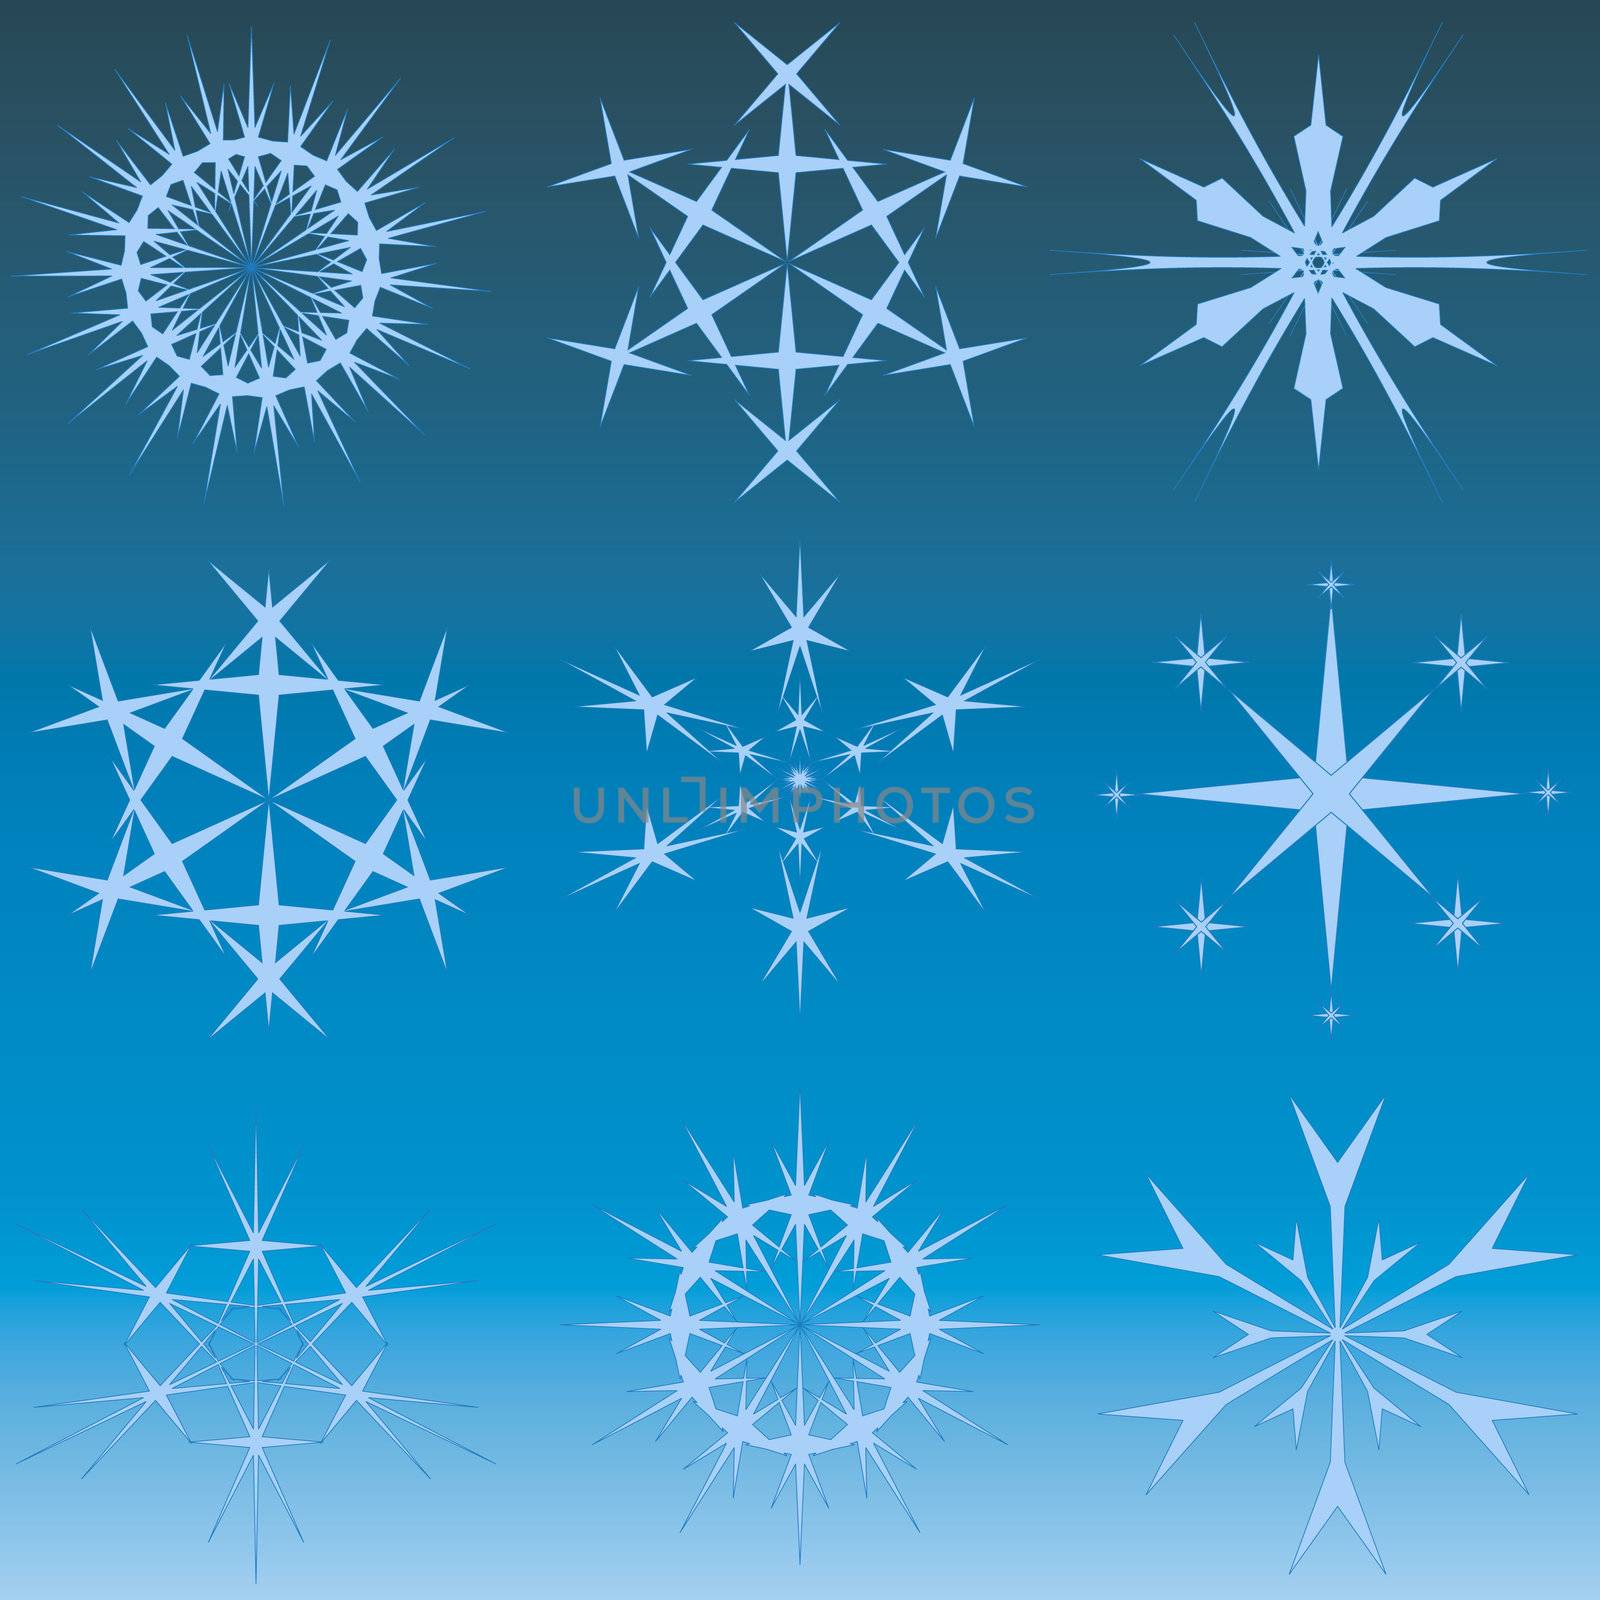 snowflakes and stars by hospitalera